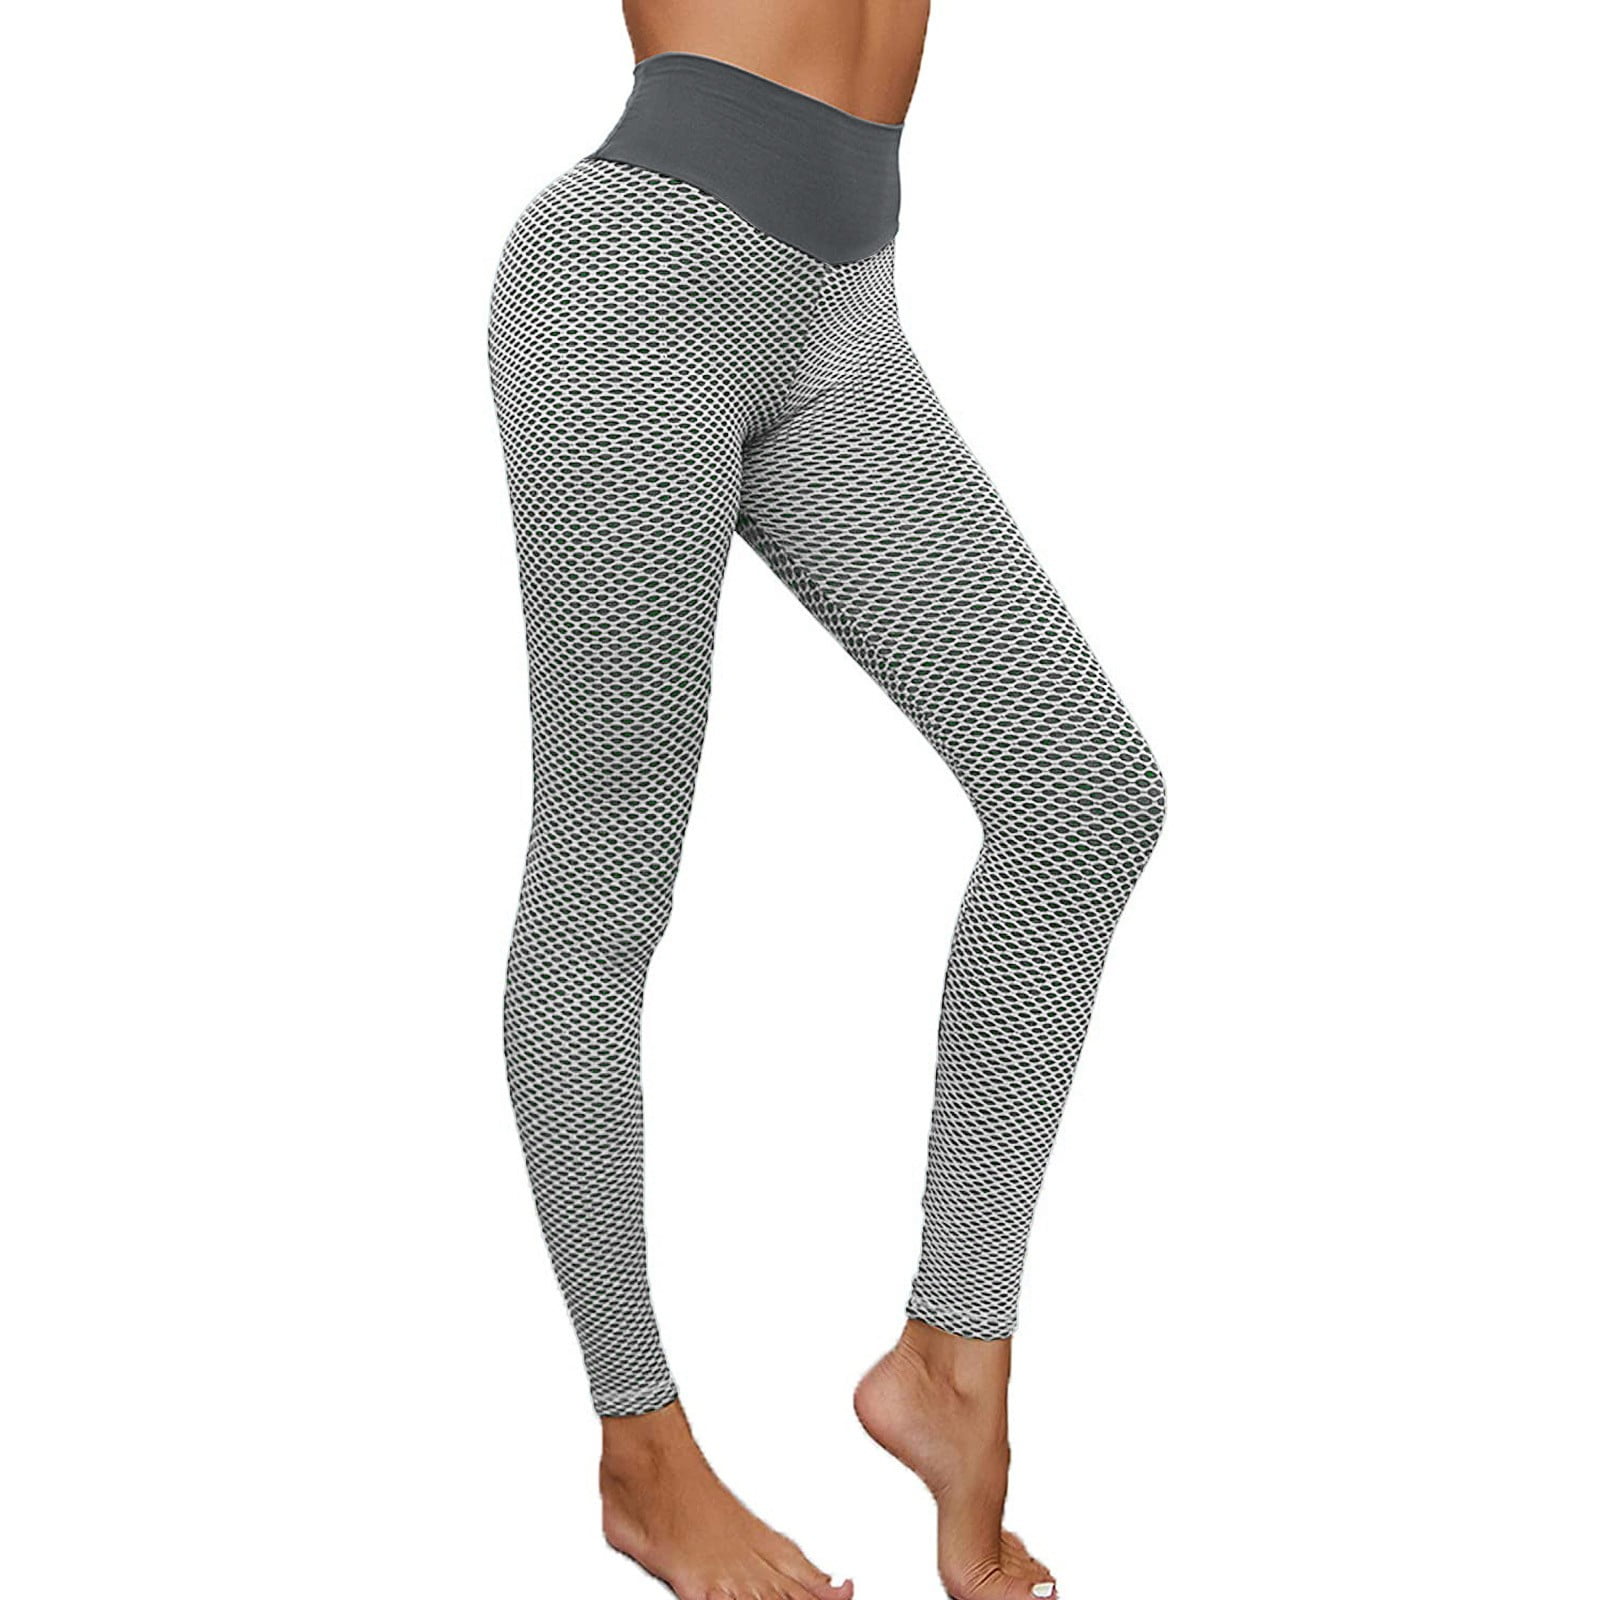 Yoga Pants for Women Petite Length Cotton Women039s Black And White  Striped  eBay